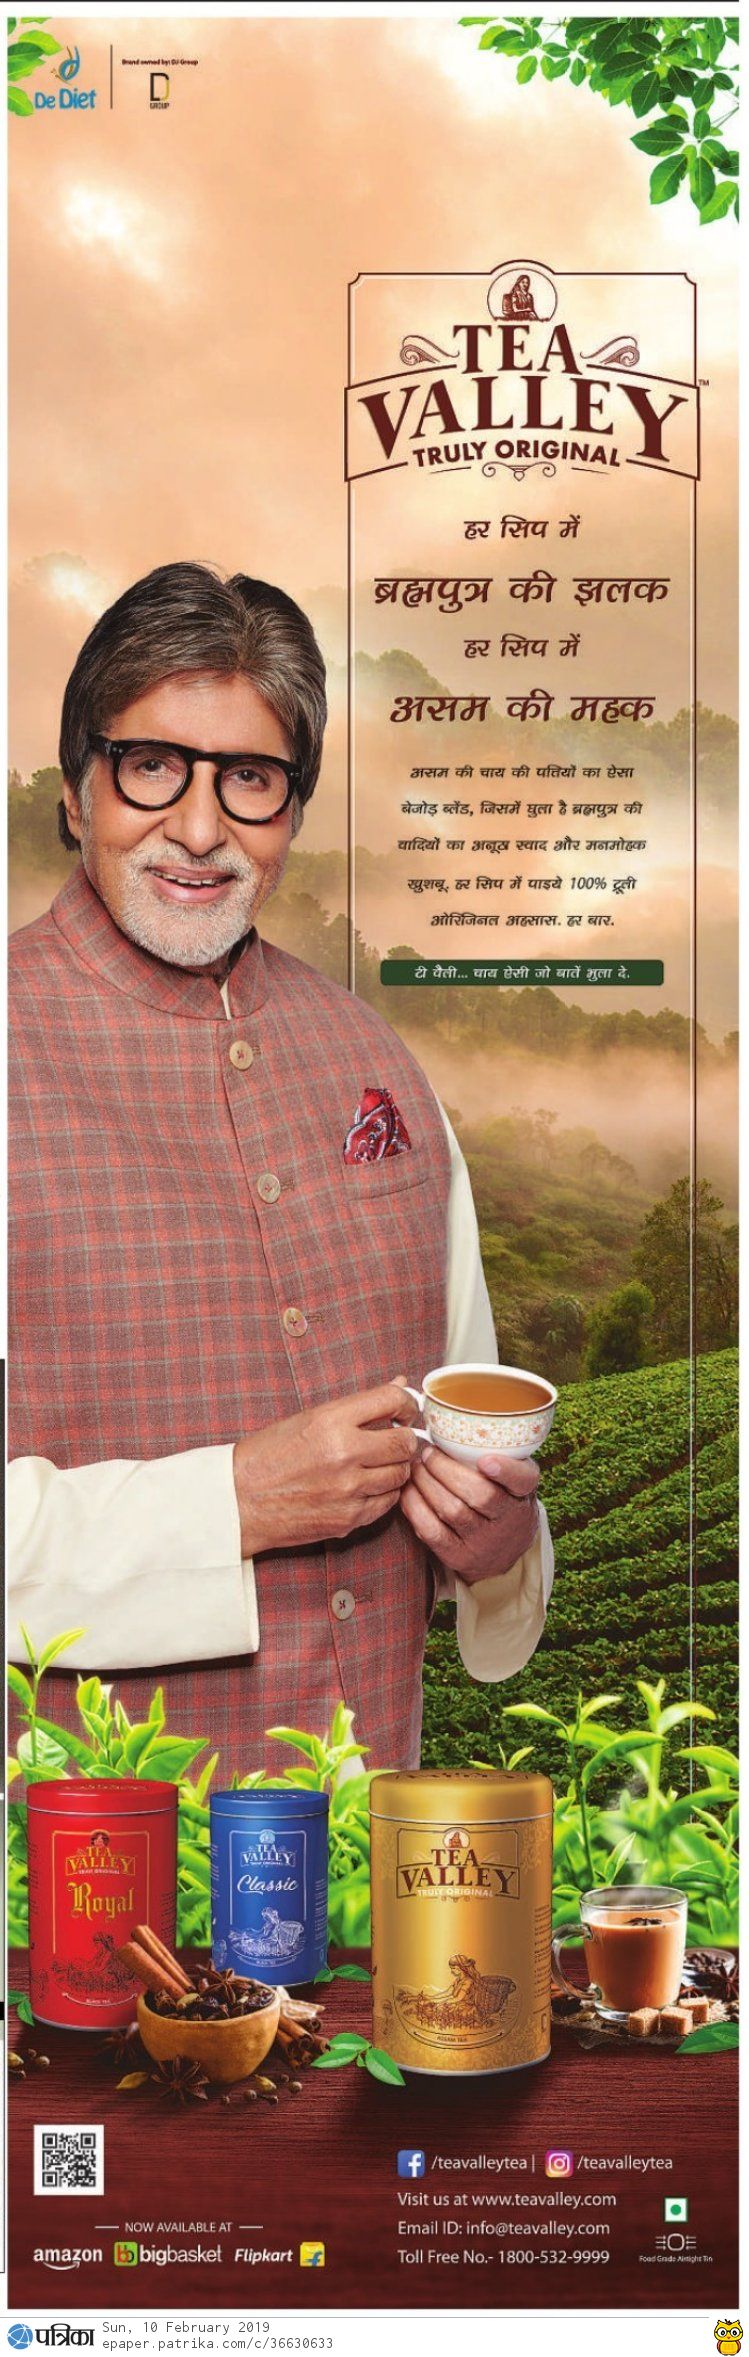 tea-valley-truly-original-ad-rajasthan-patrika-bhopal-10-02-2019.jpg